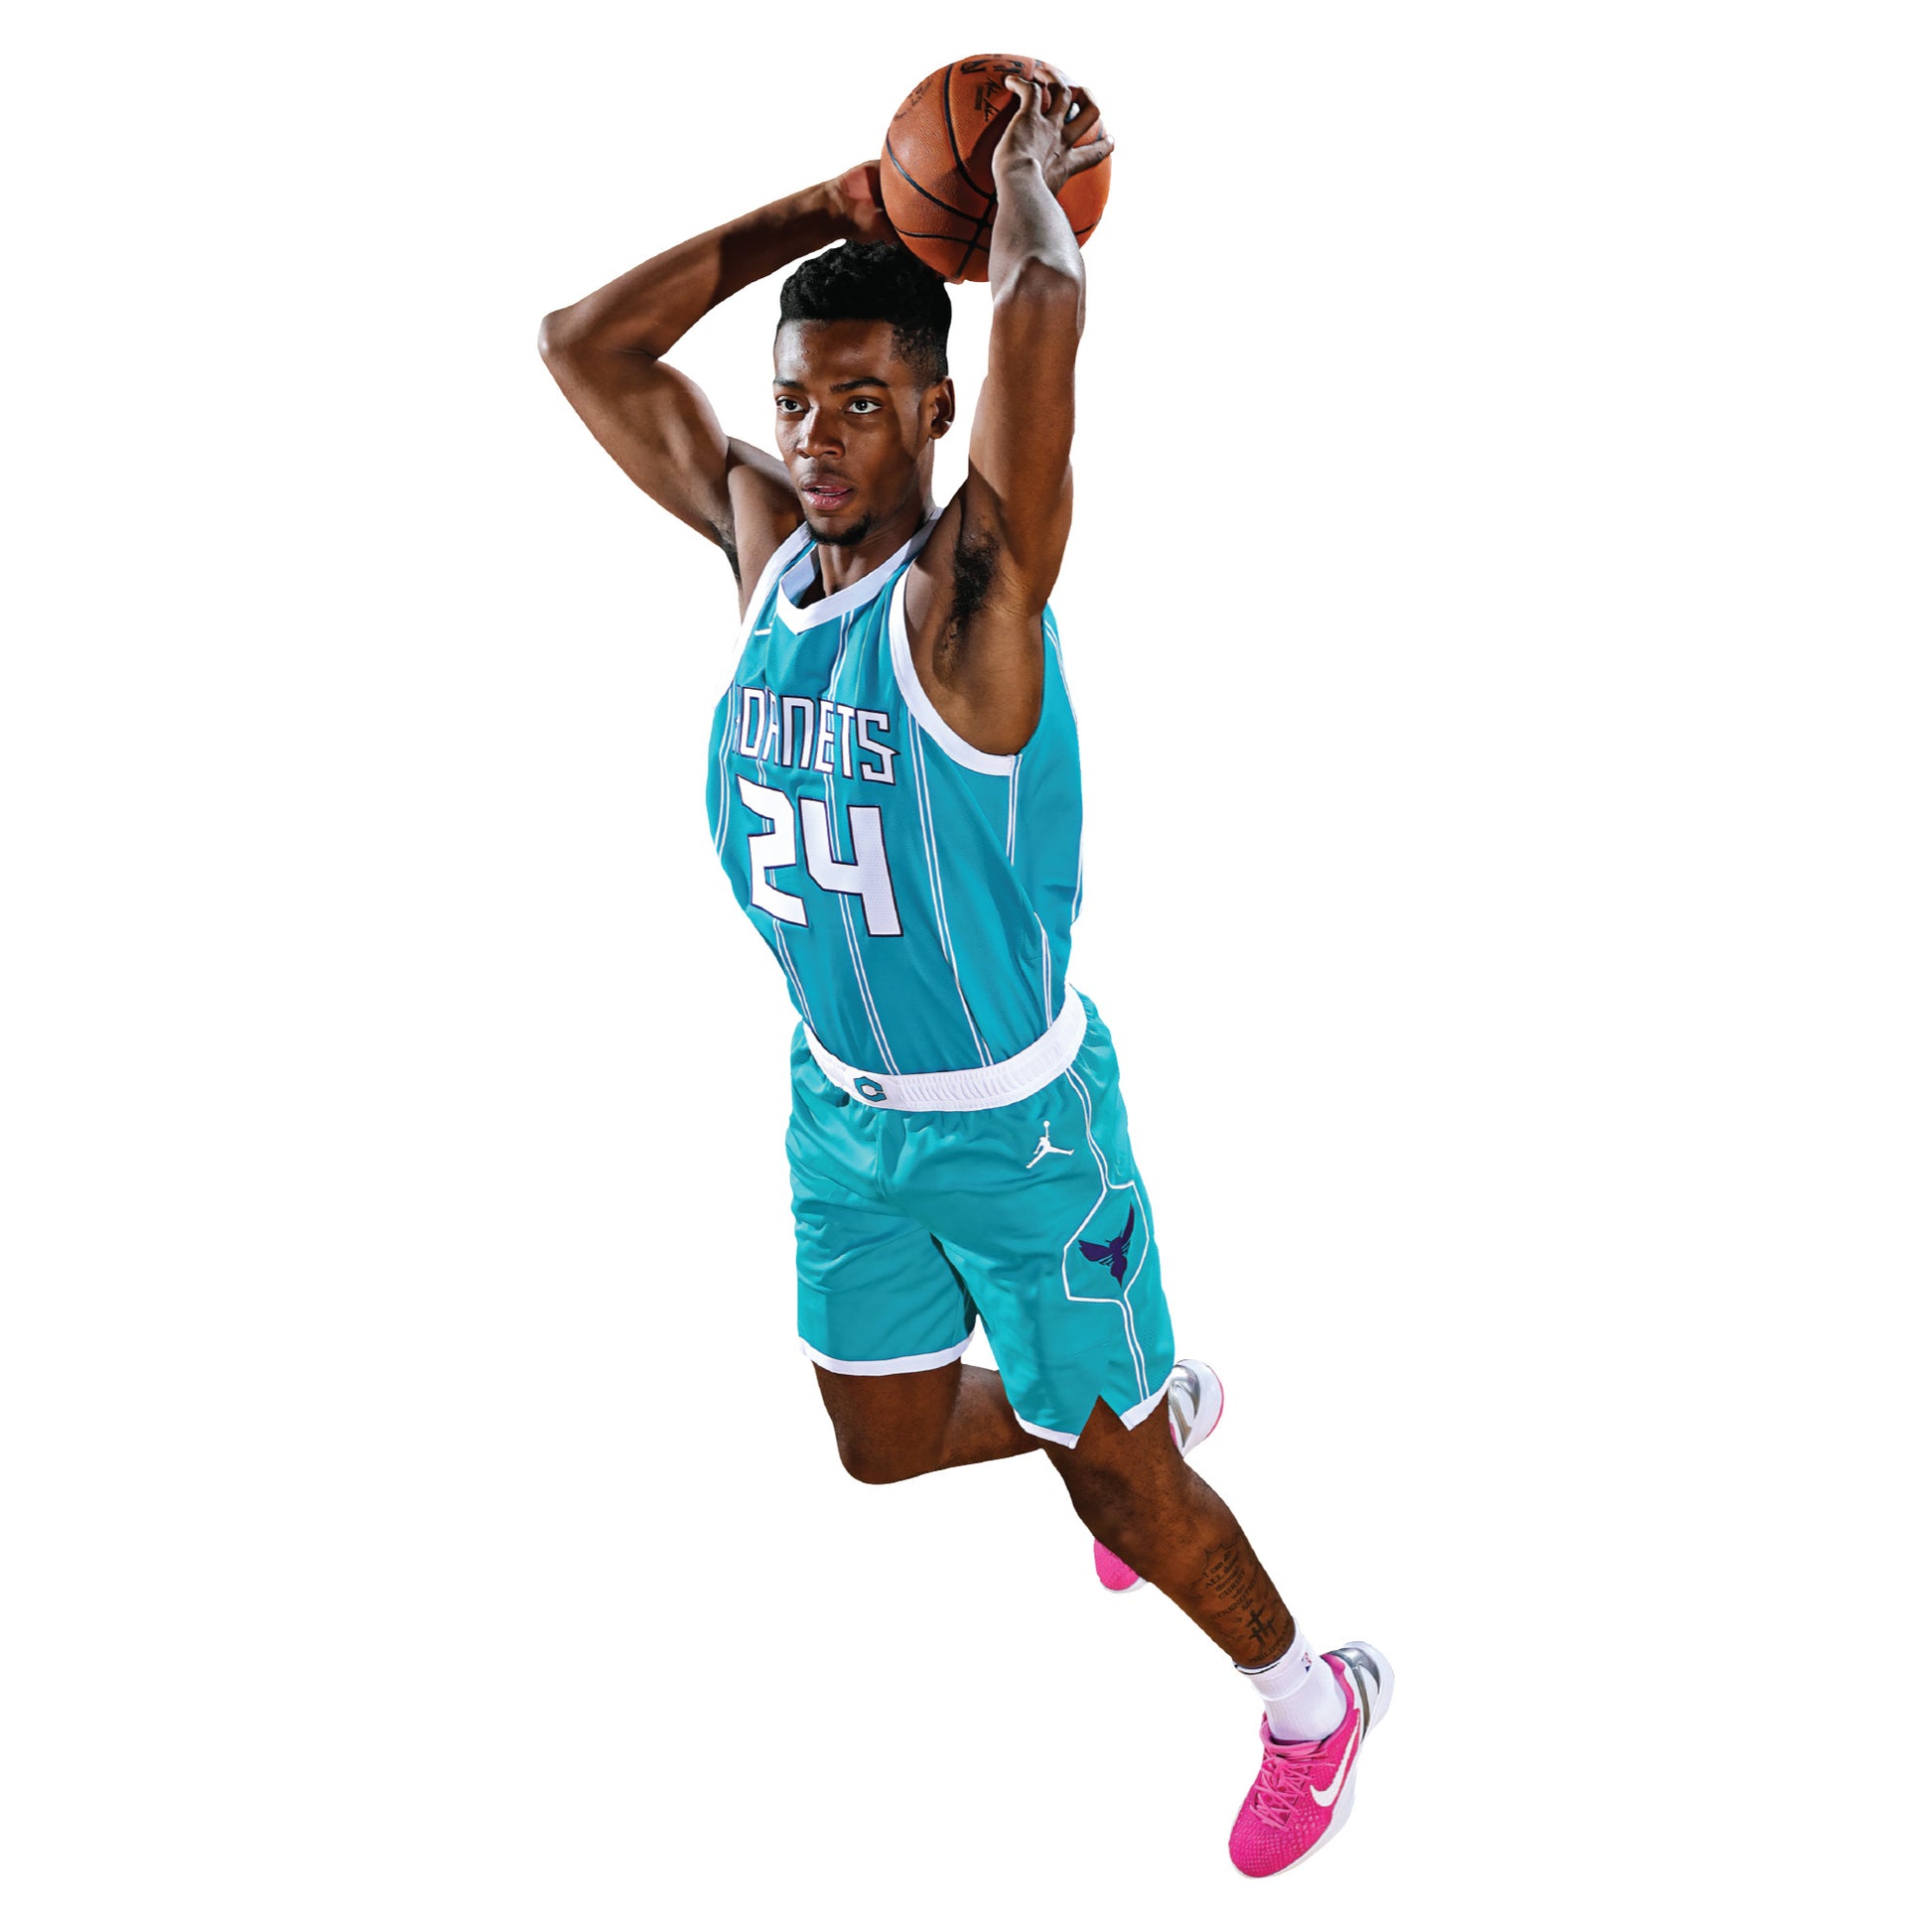 Charlotte Hornets: Brandon Miller Preseason - Officially Licensed NBA –  Fathead